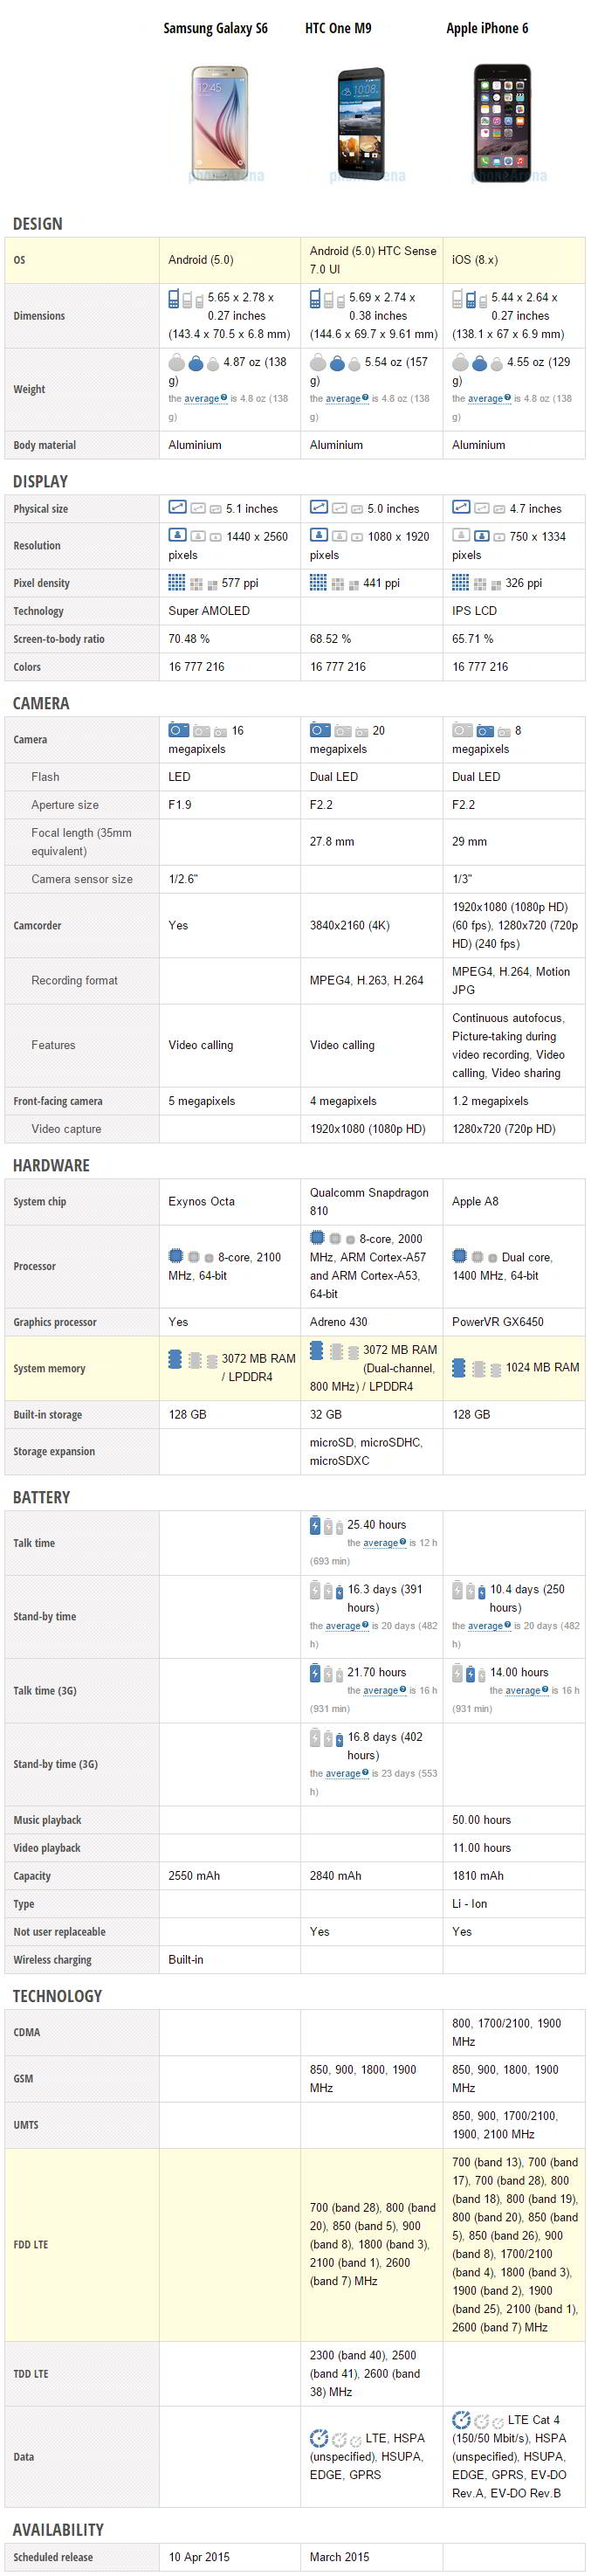 Samsung Galaxy S6 vs HTC One M9 vs Apple iPhone 6 teknisten tietojen vertailu